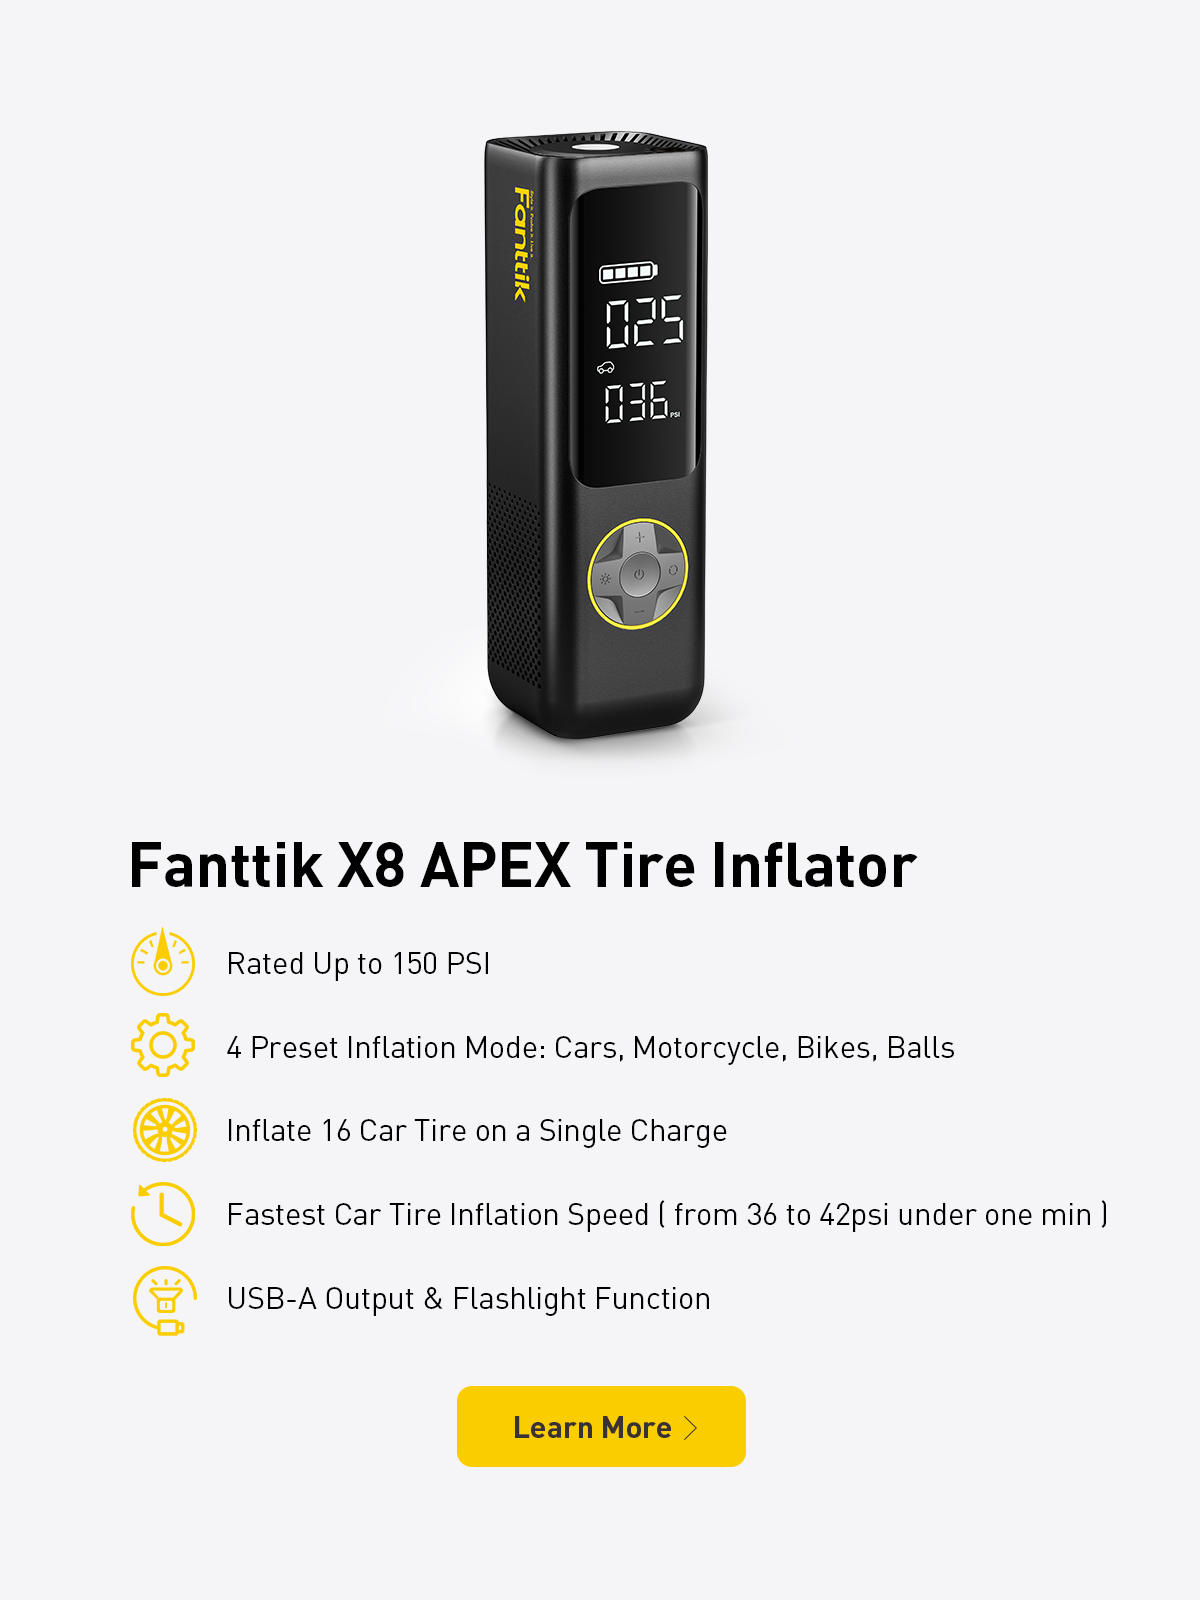 fanttik x8 apex tire inflator for cars detailed